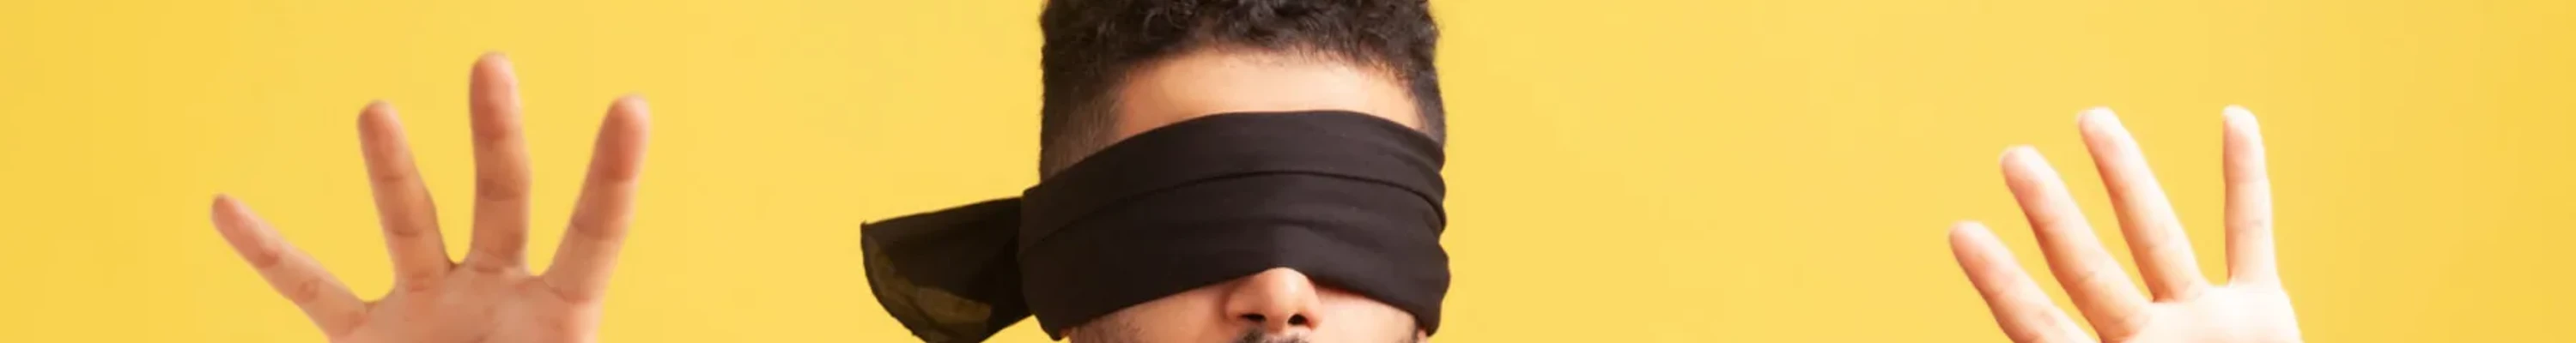 man with blindfold resized